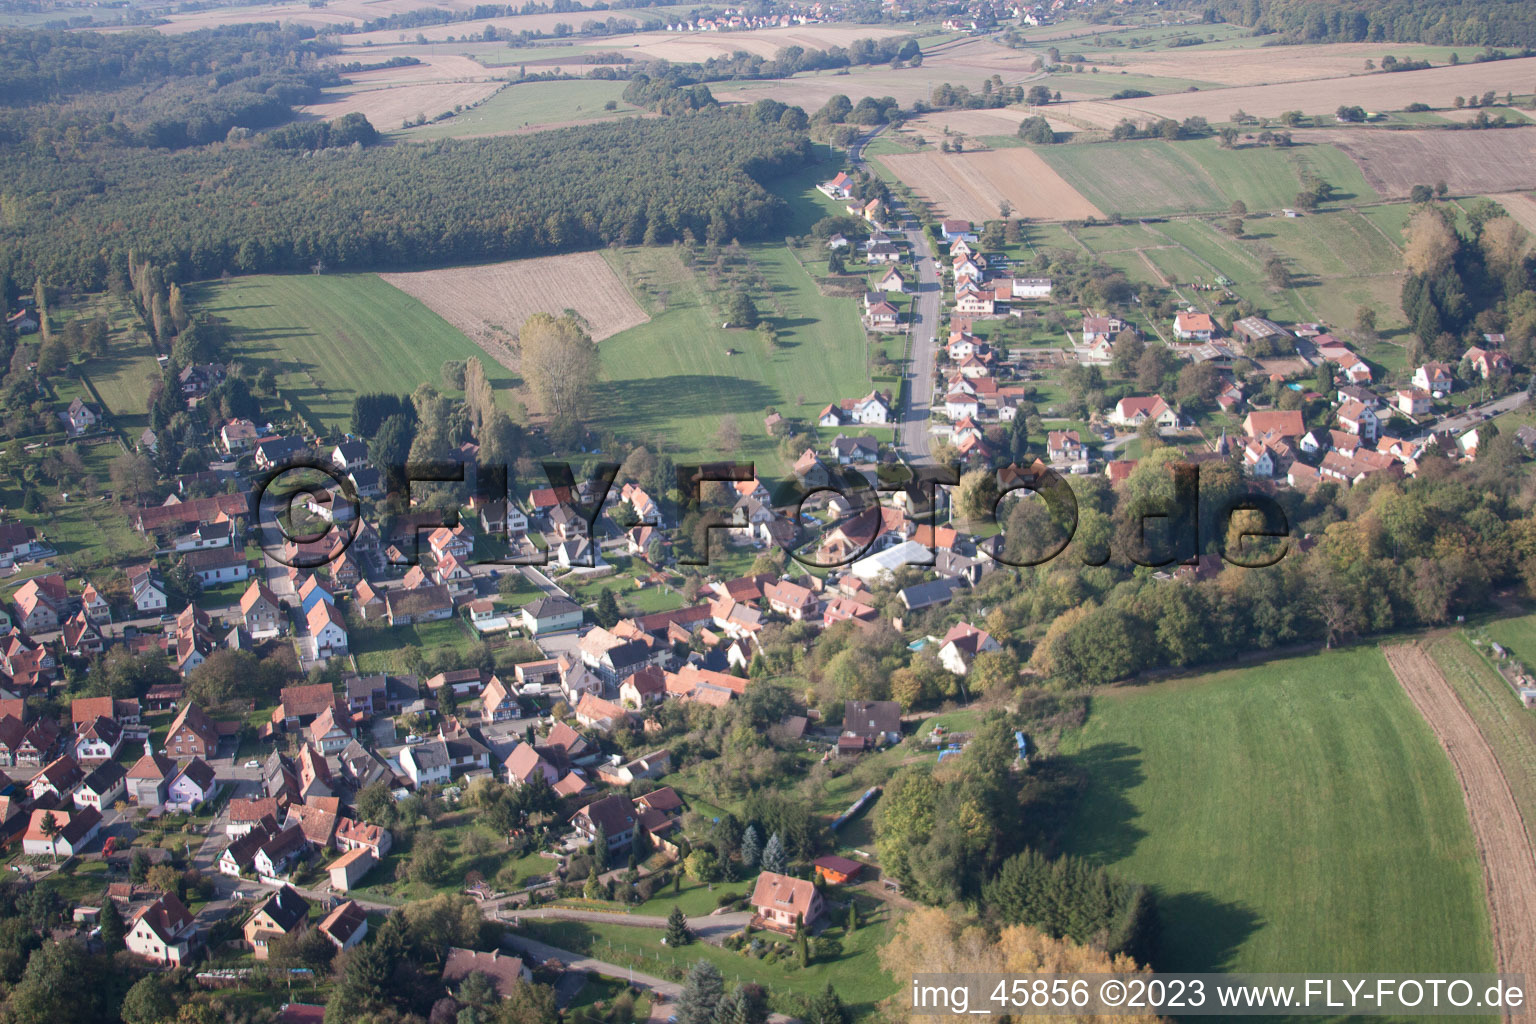 Drone image of Lobsann in the state Bas-Rhin, France